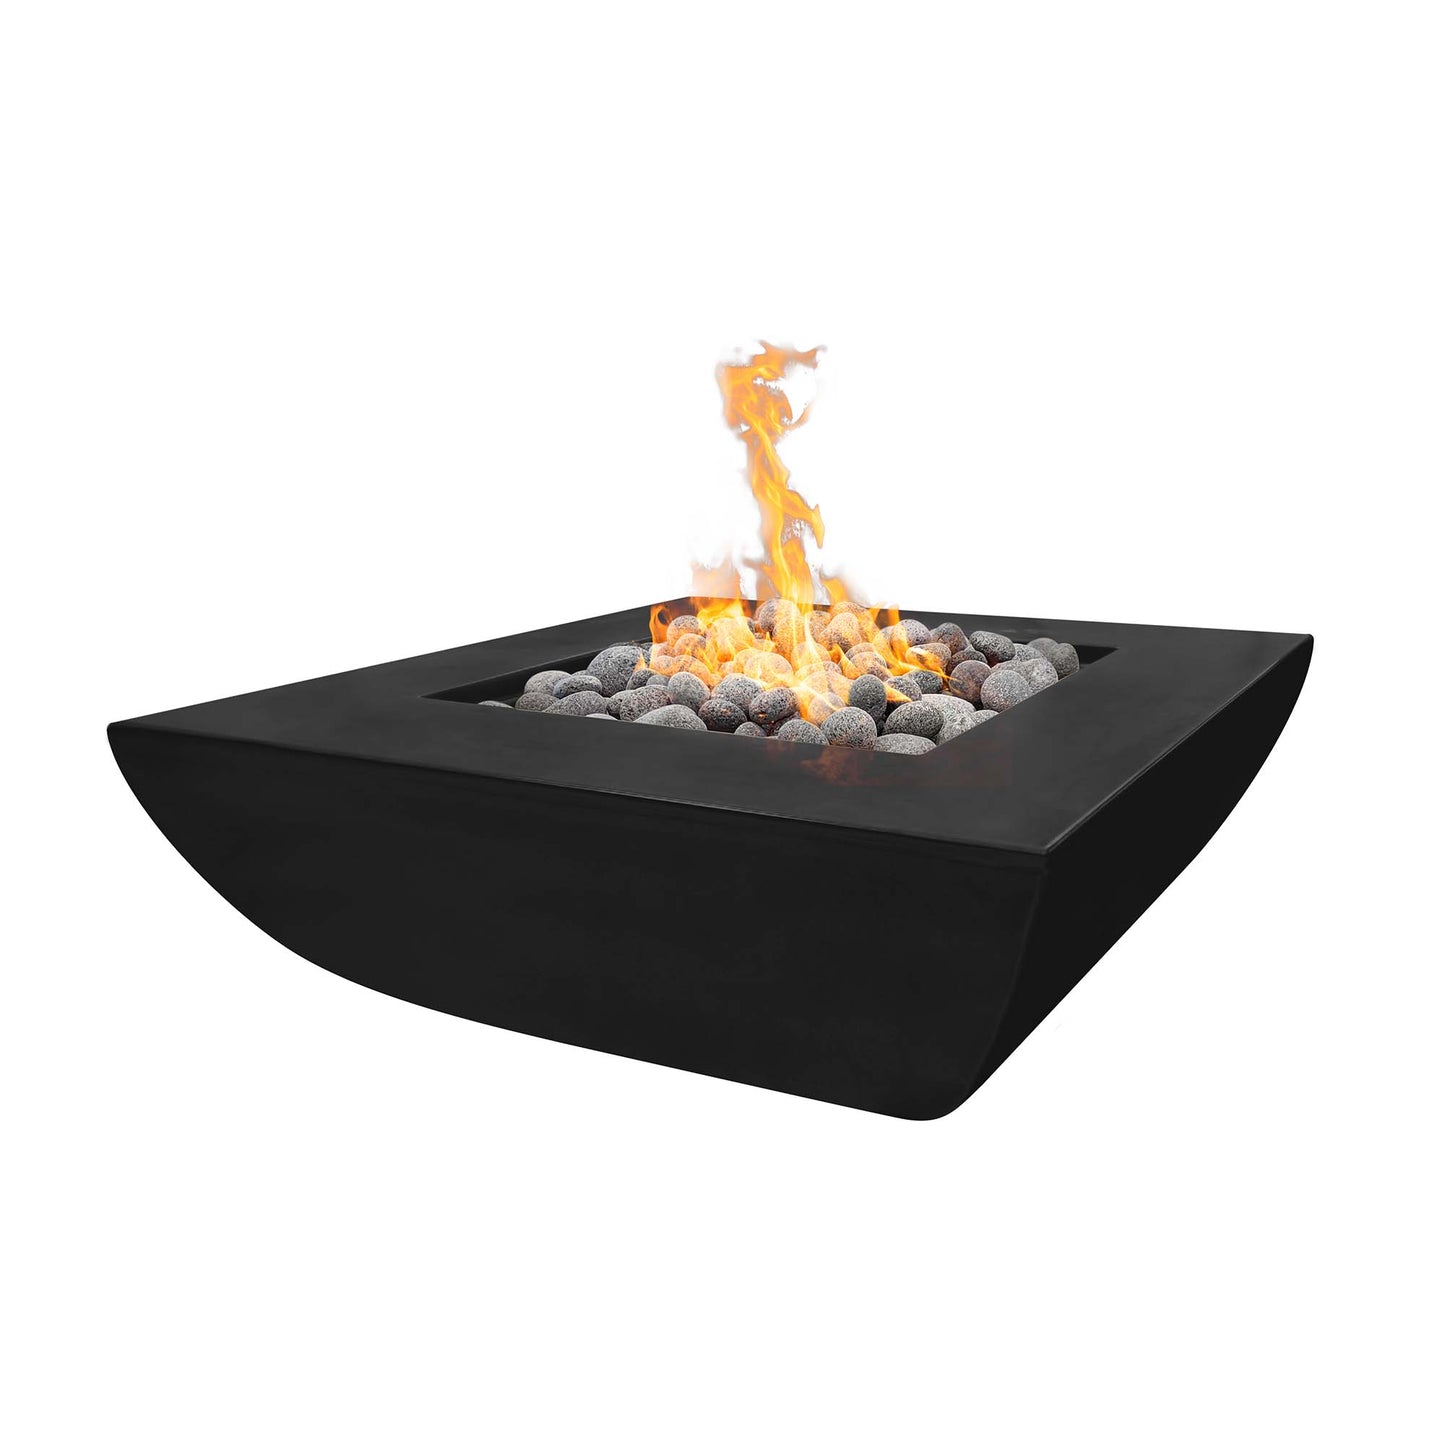 The Outdoor Plus Square Avalon 42" Chestnut GFRC Concrete Liquid Propane Fire Pit with Match Lit with Flame Sense Ignition